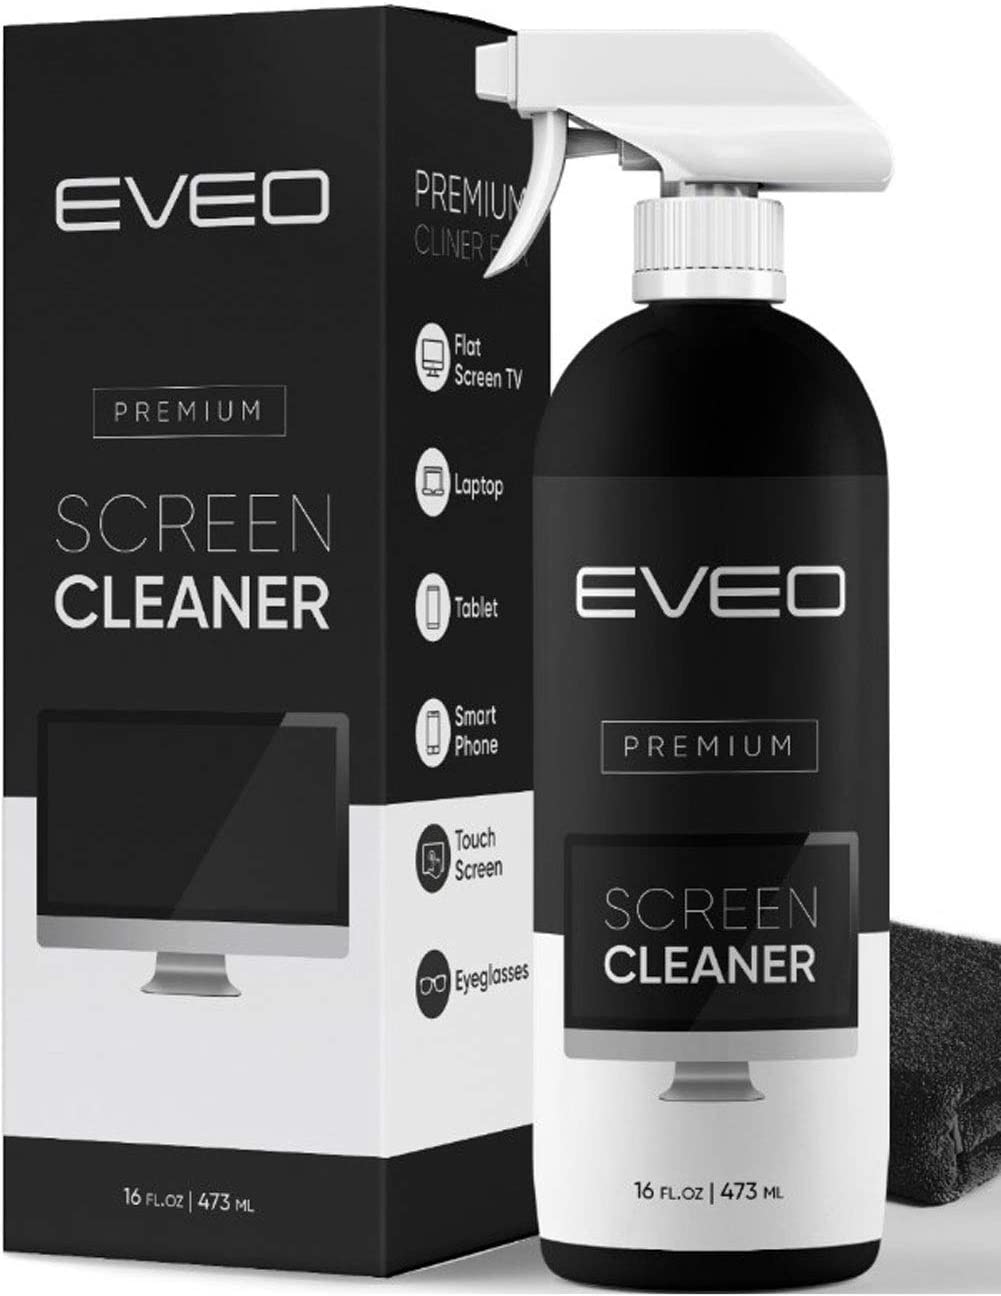 EVEO Premium Screen Cleaner Shine Spray Kit